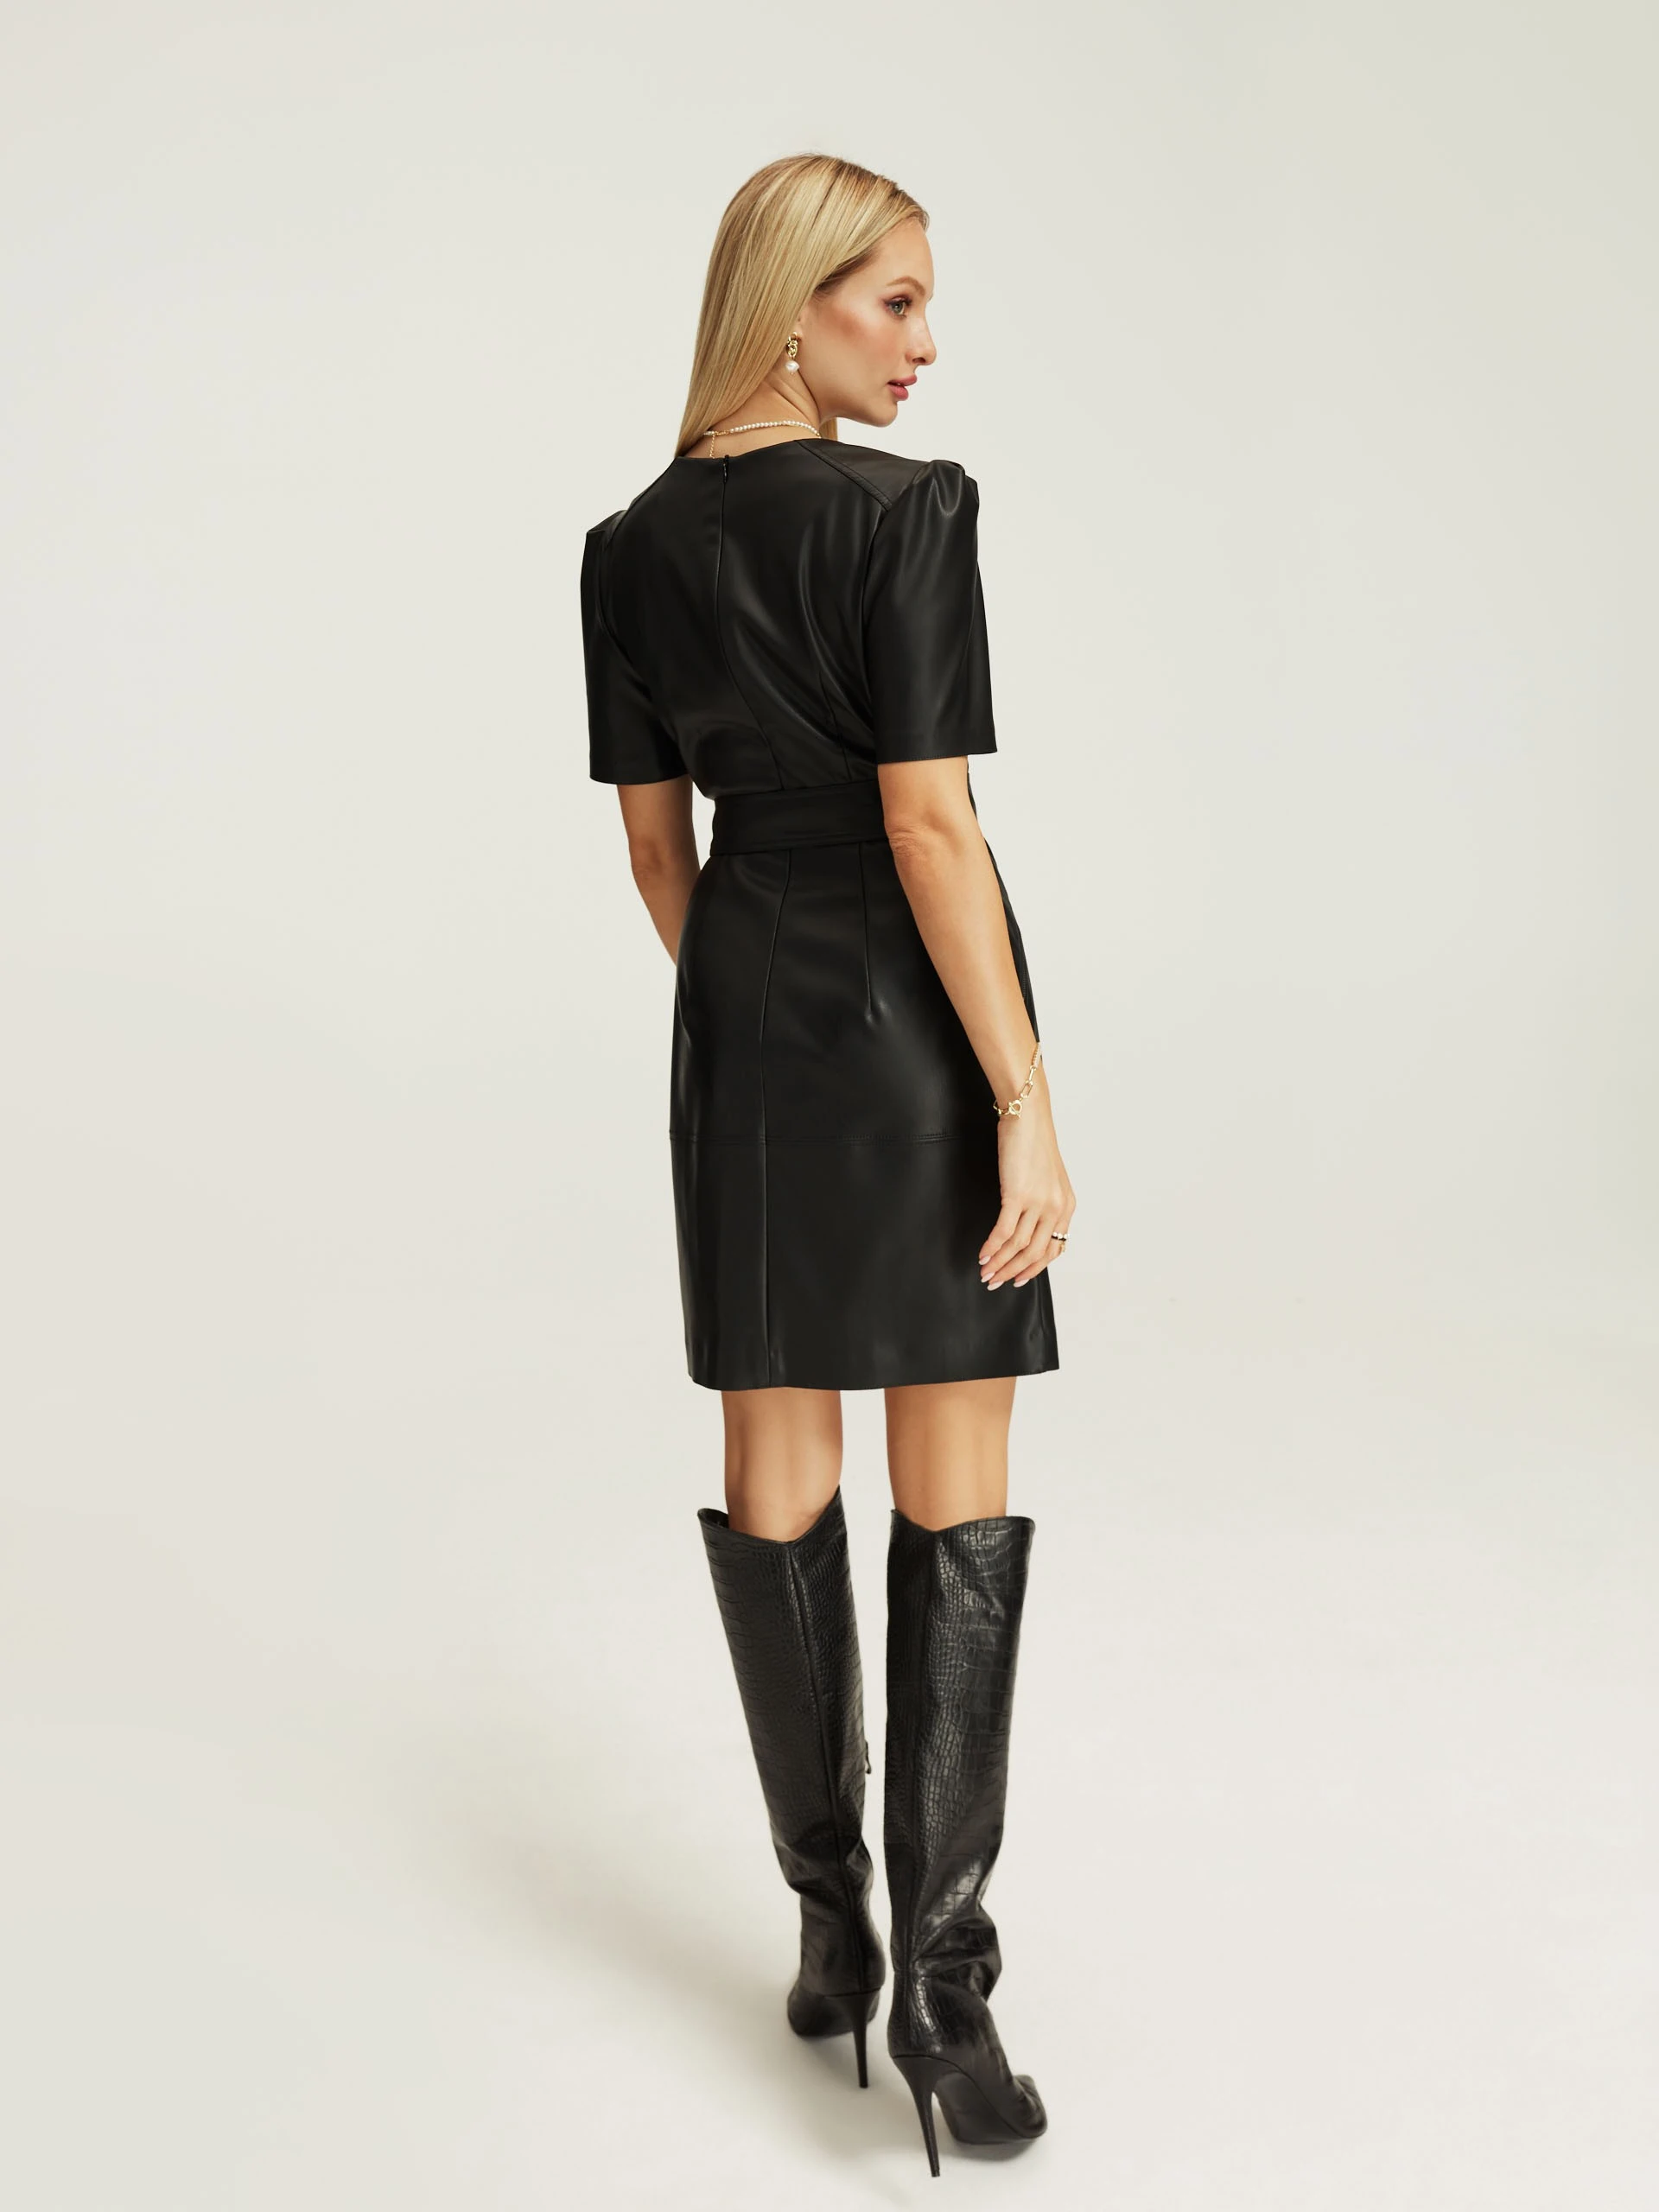 Black imitation leather dress